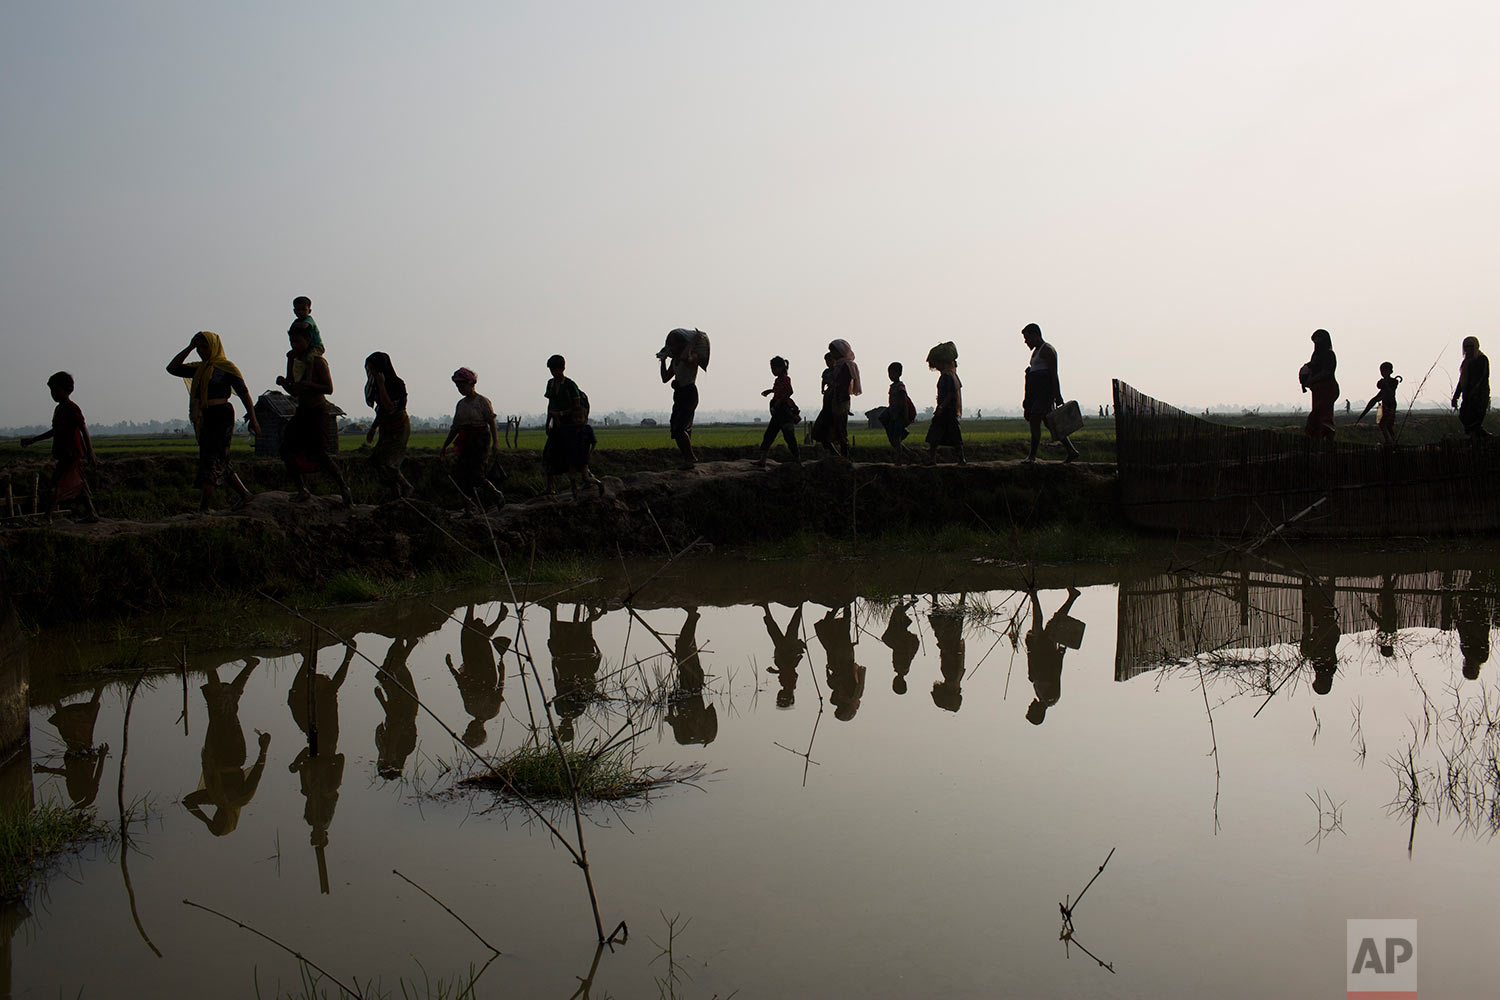 Members of Myanmar's Rohingya ethnic minority walk through rice fields after crossing the border into Bangladesh near Cox's Bazar's Teknaf area, Tuesday, Sept. 5, 2017. (AP Photo/Bernat Armangue)